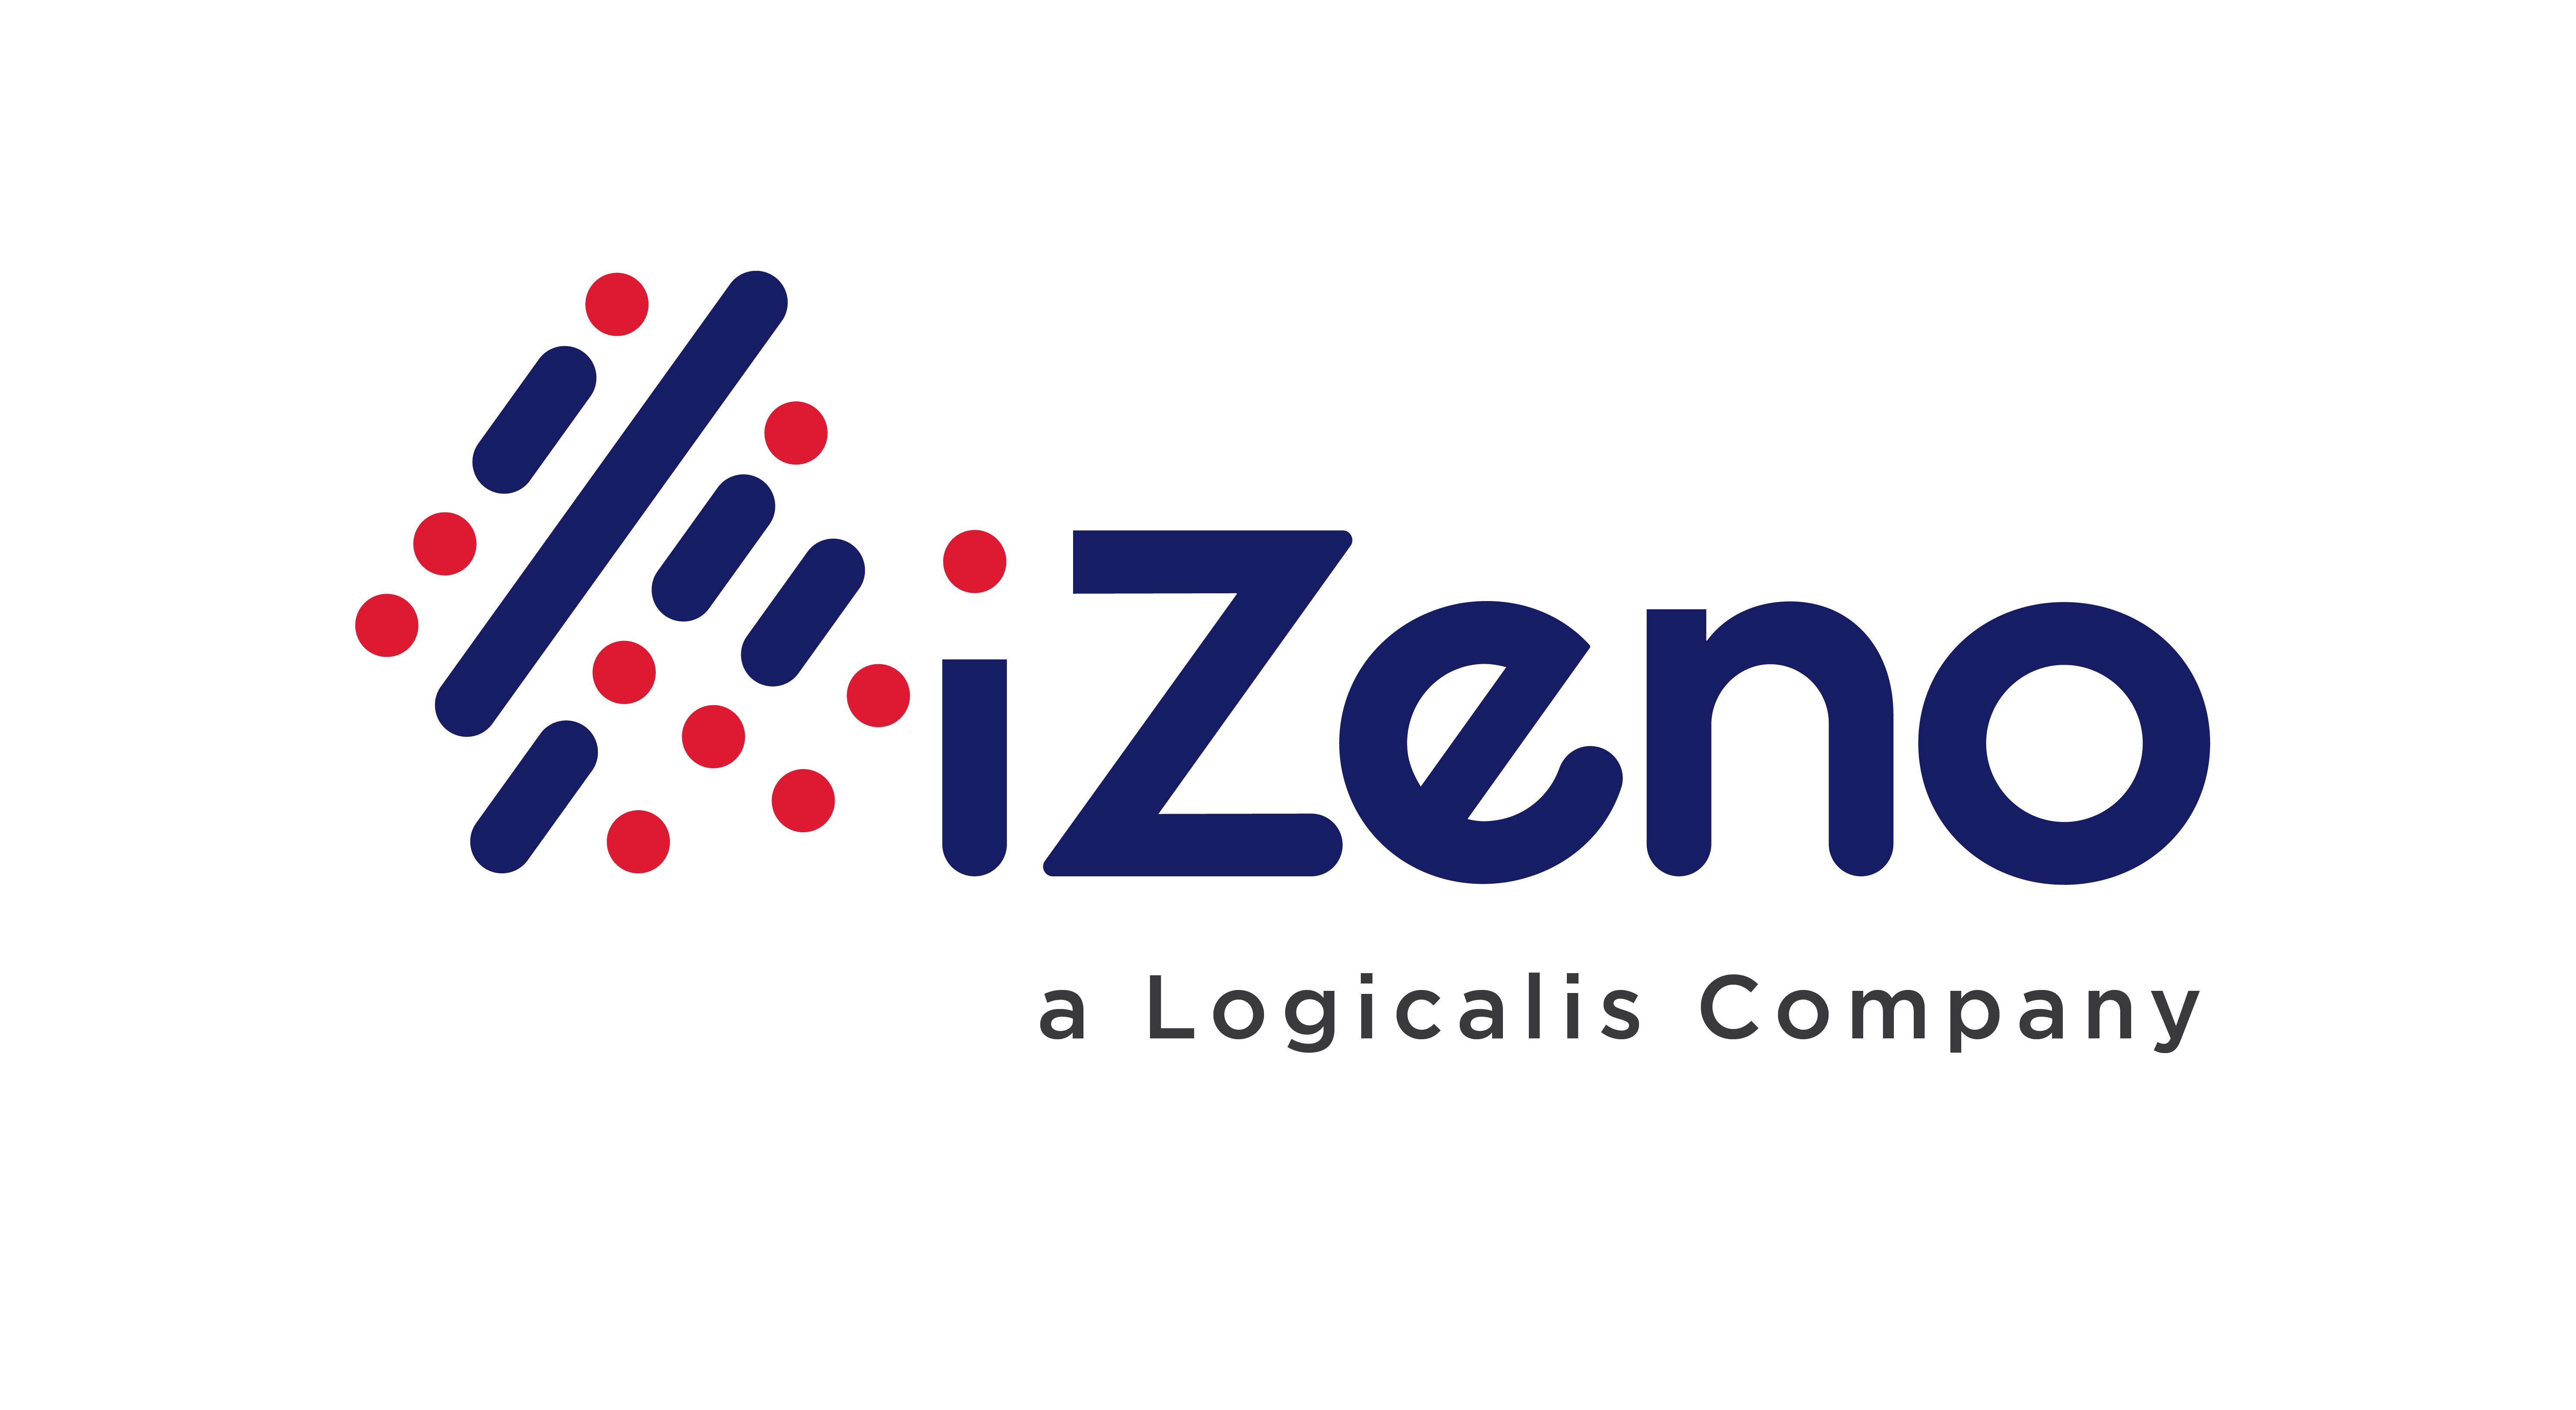 iZeno logo